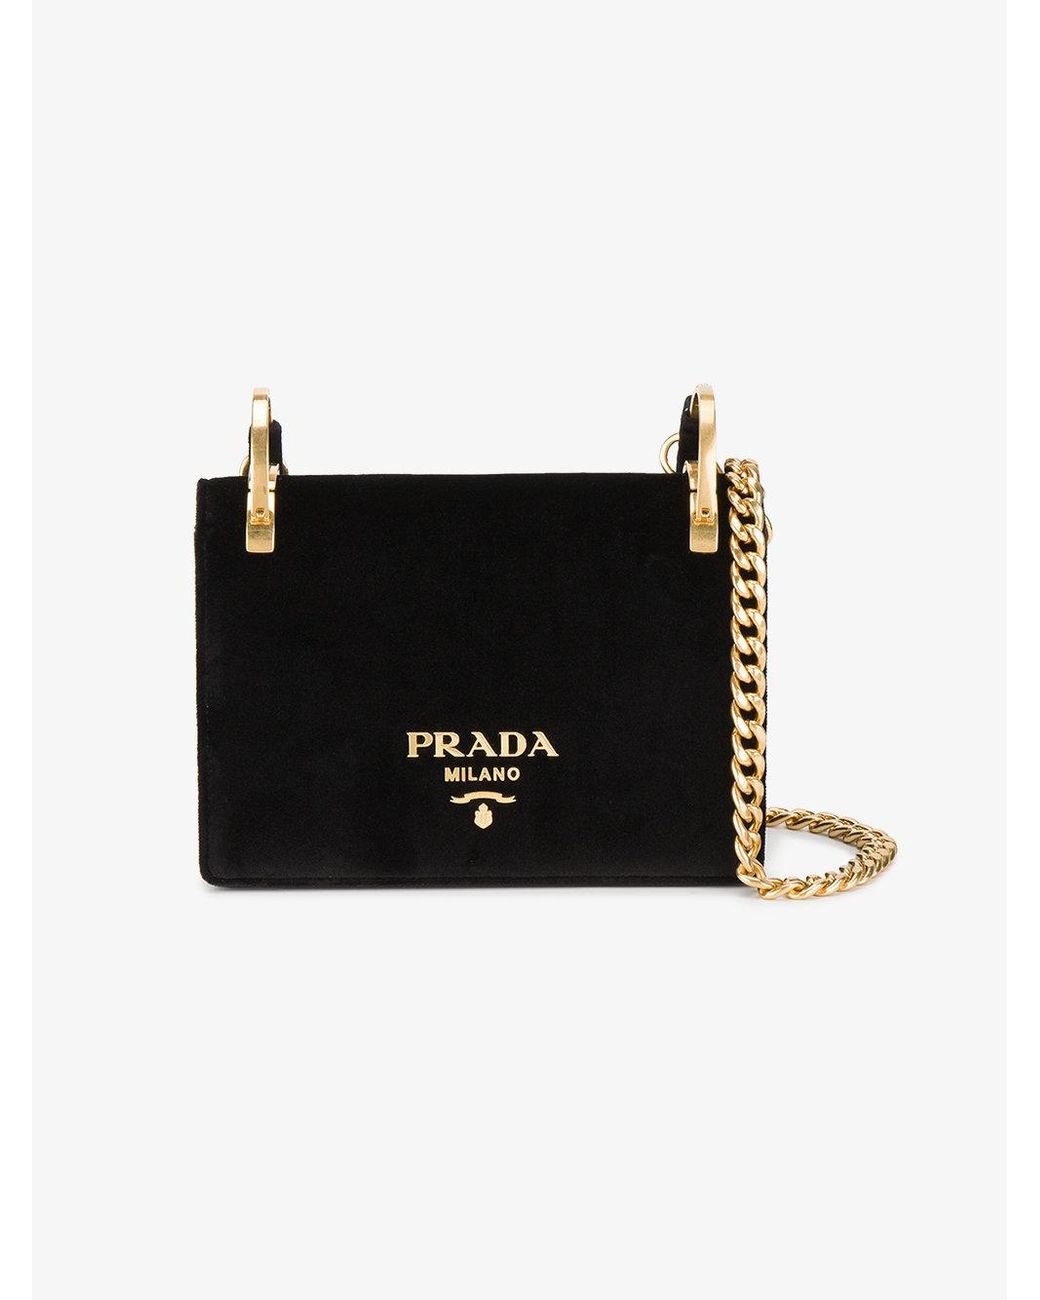 Prada Velvet Pattina Bag With Gold Chain in Black | Lyst UK